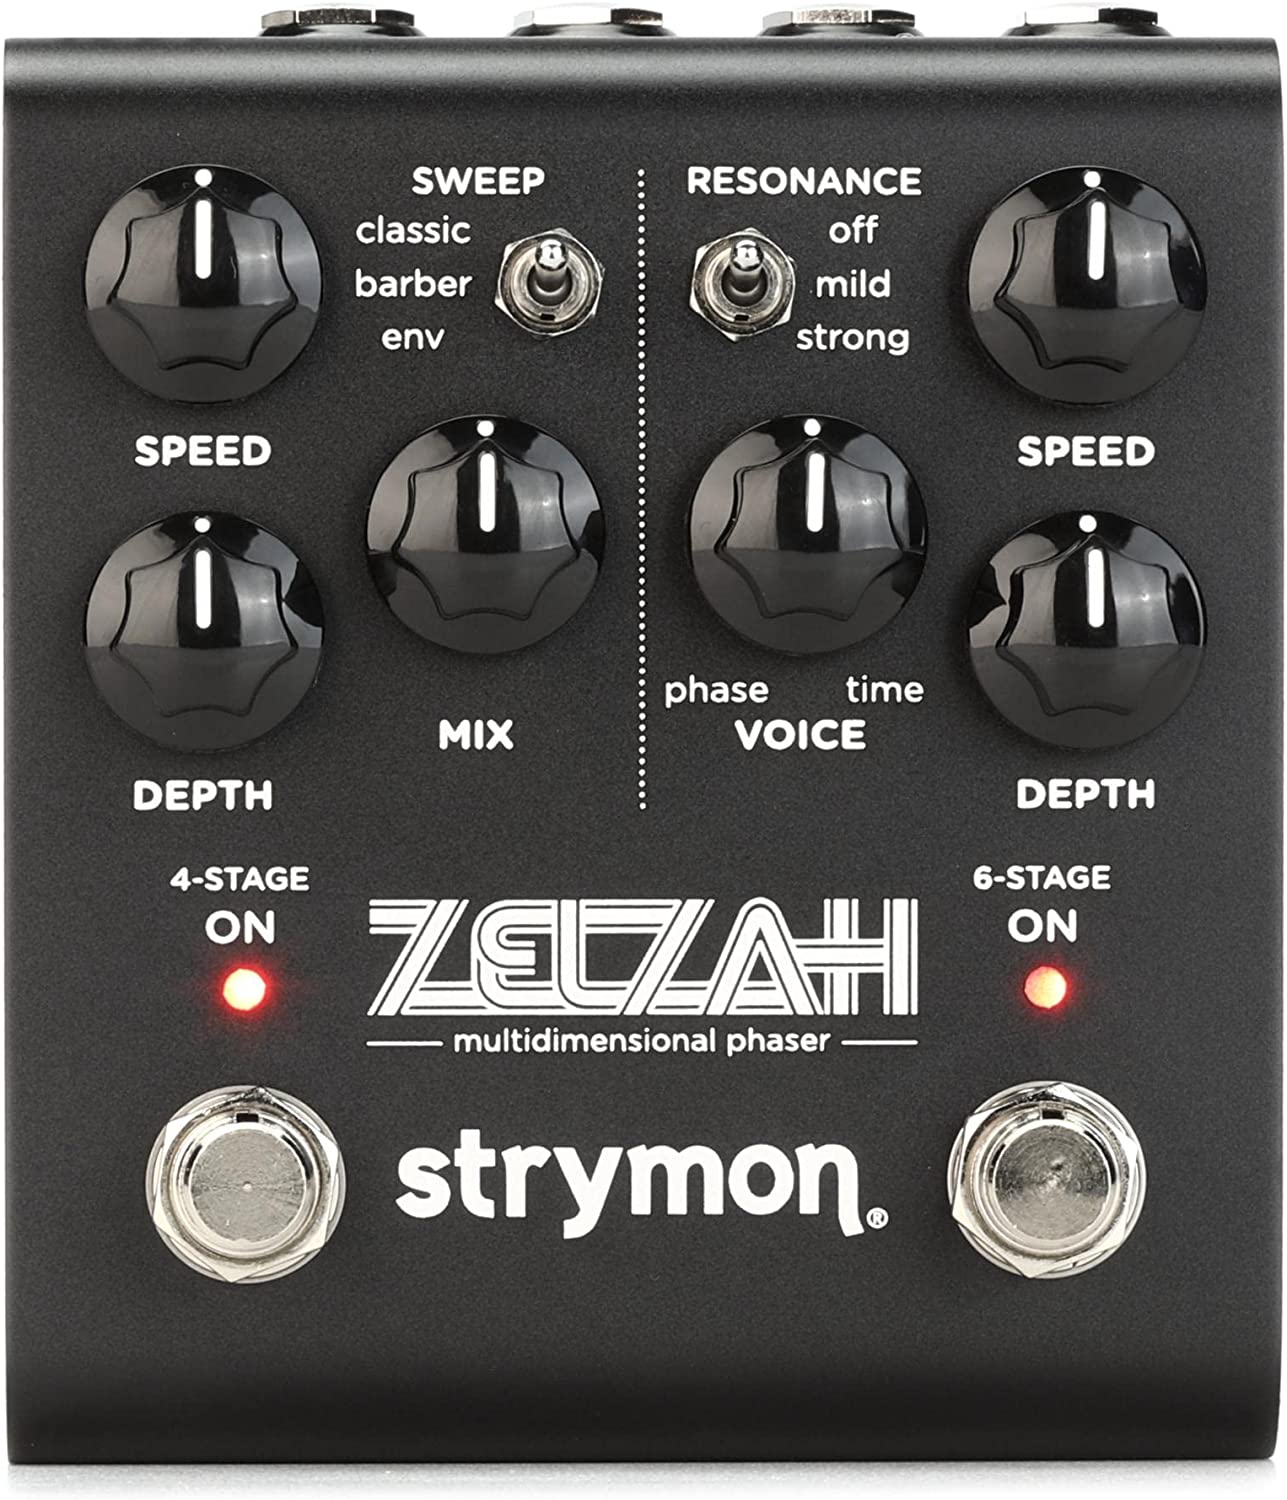 Strymon Zelzah Multidimensional Phaser Pedal on a white background